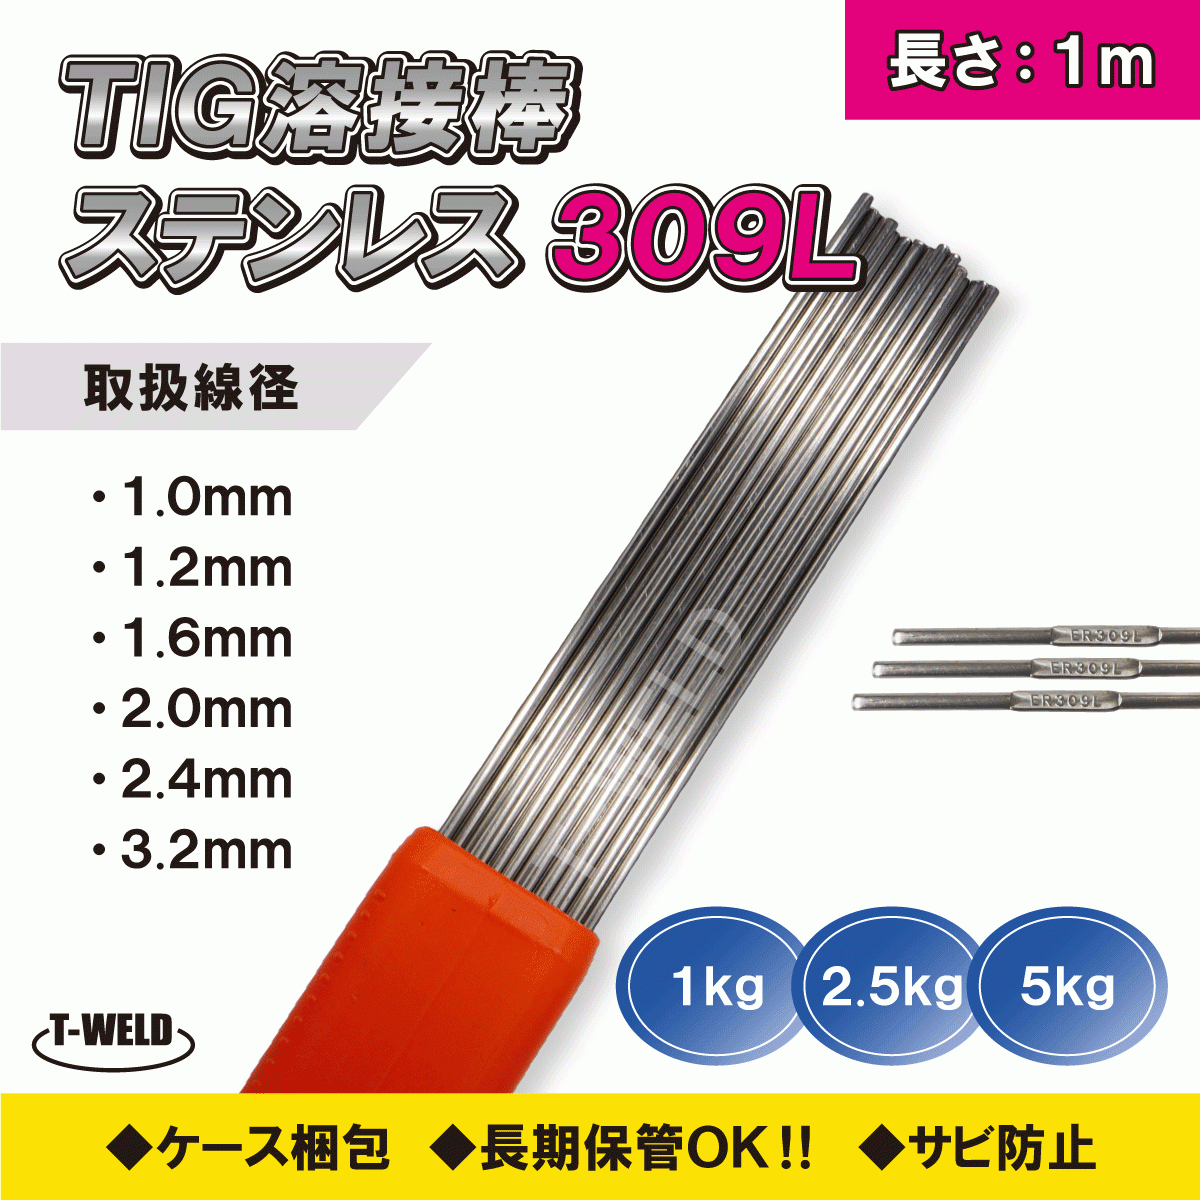 TIG stainless steel welding stick TIG 309L 1.2mm×1m 2.5kg